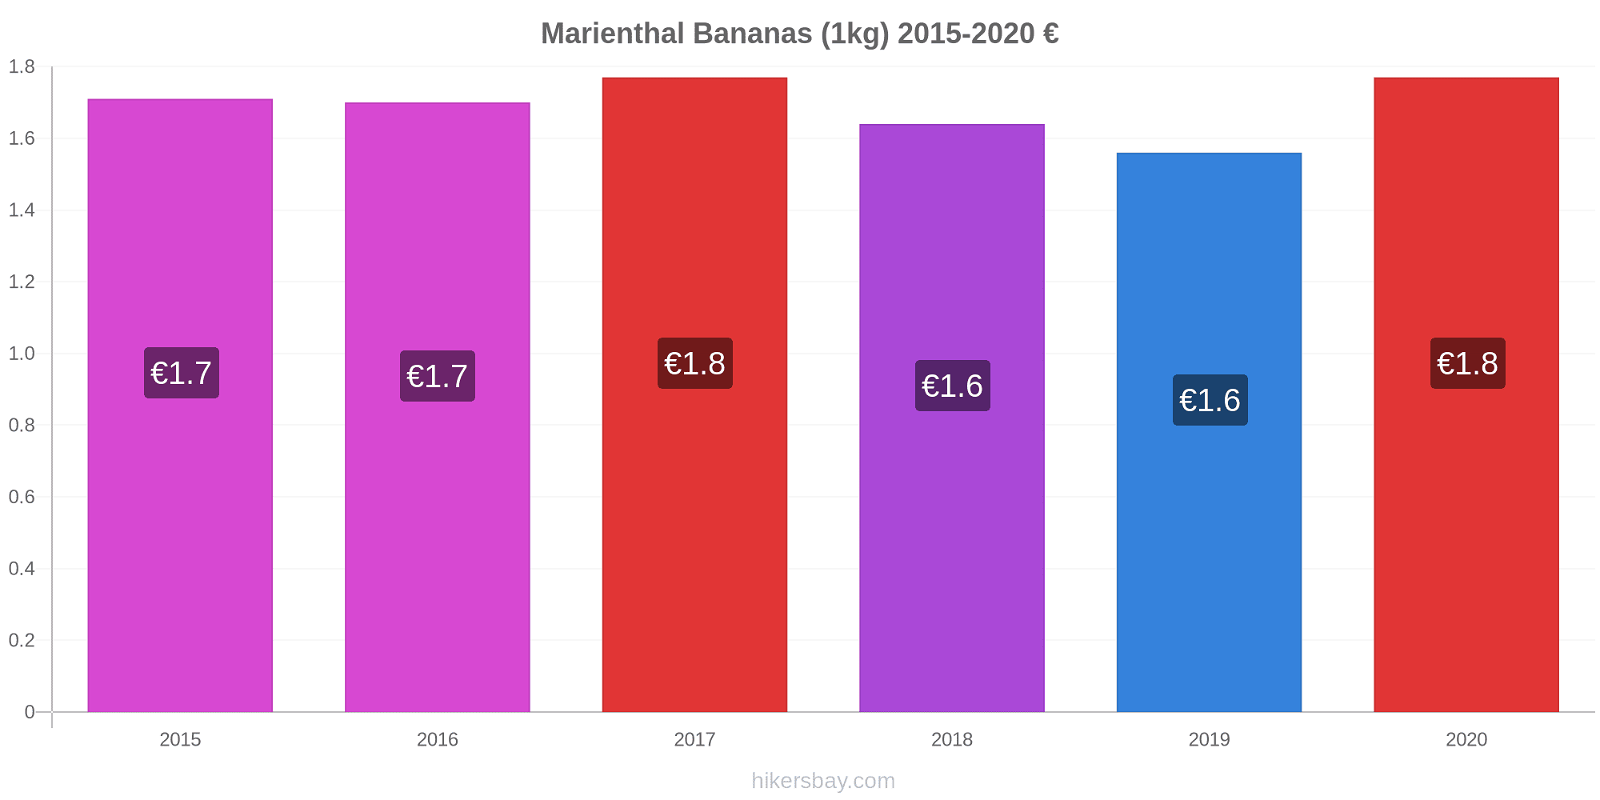 Marienthal price changes Bananas (1kg) hikersbay.com